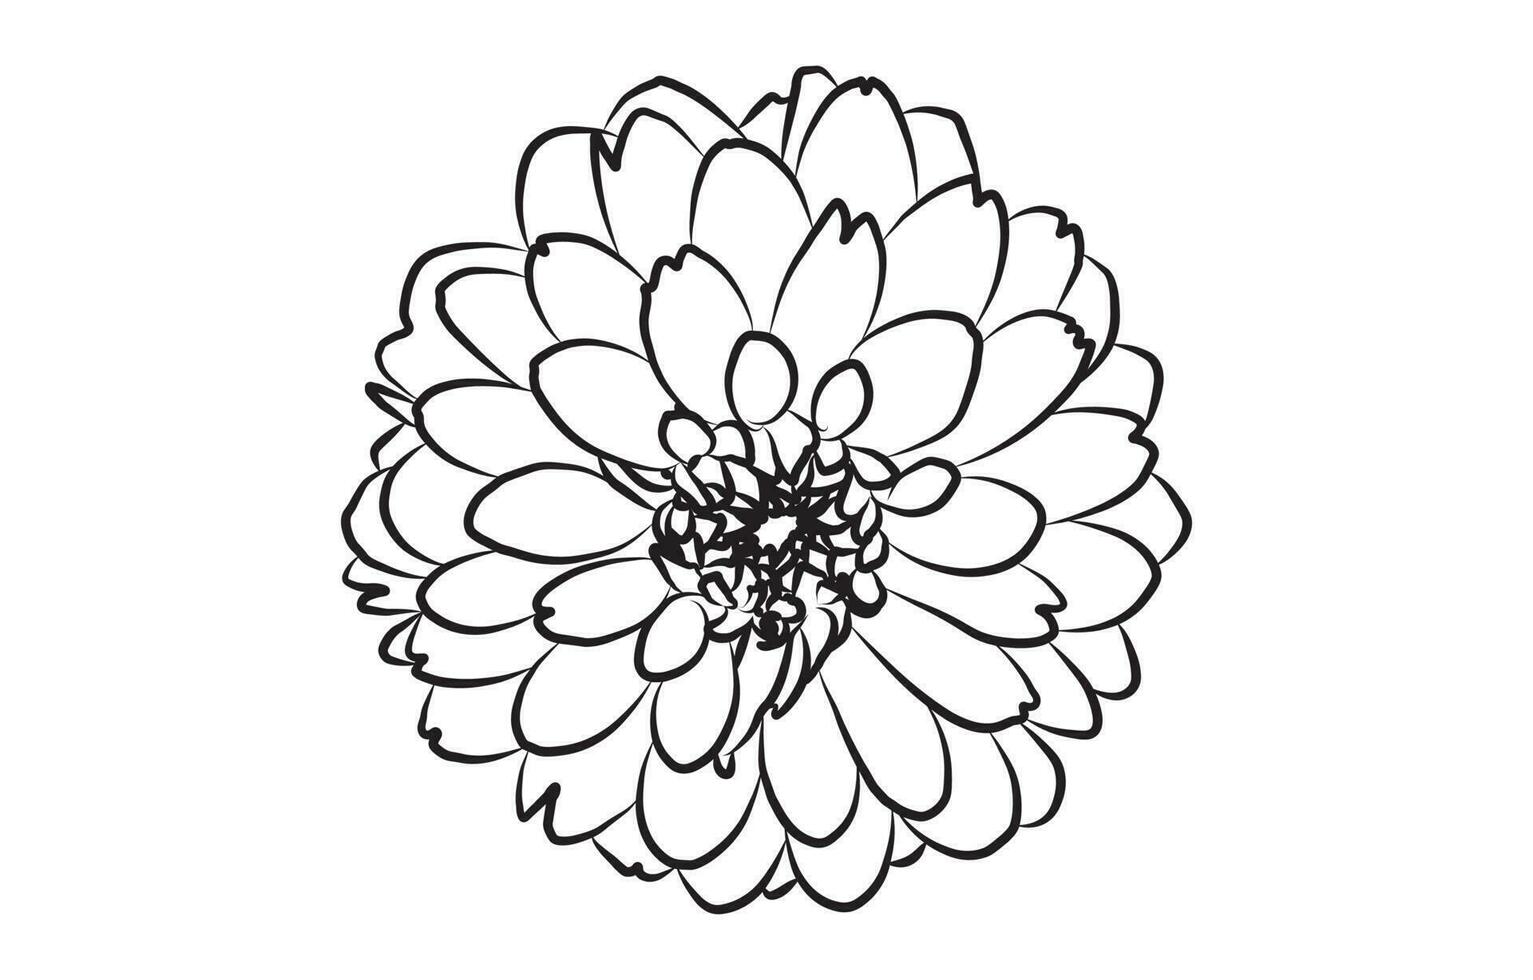 Flower vector graphic design, for prints, vector illustration